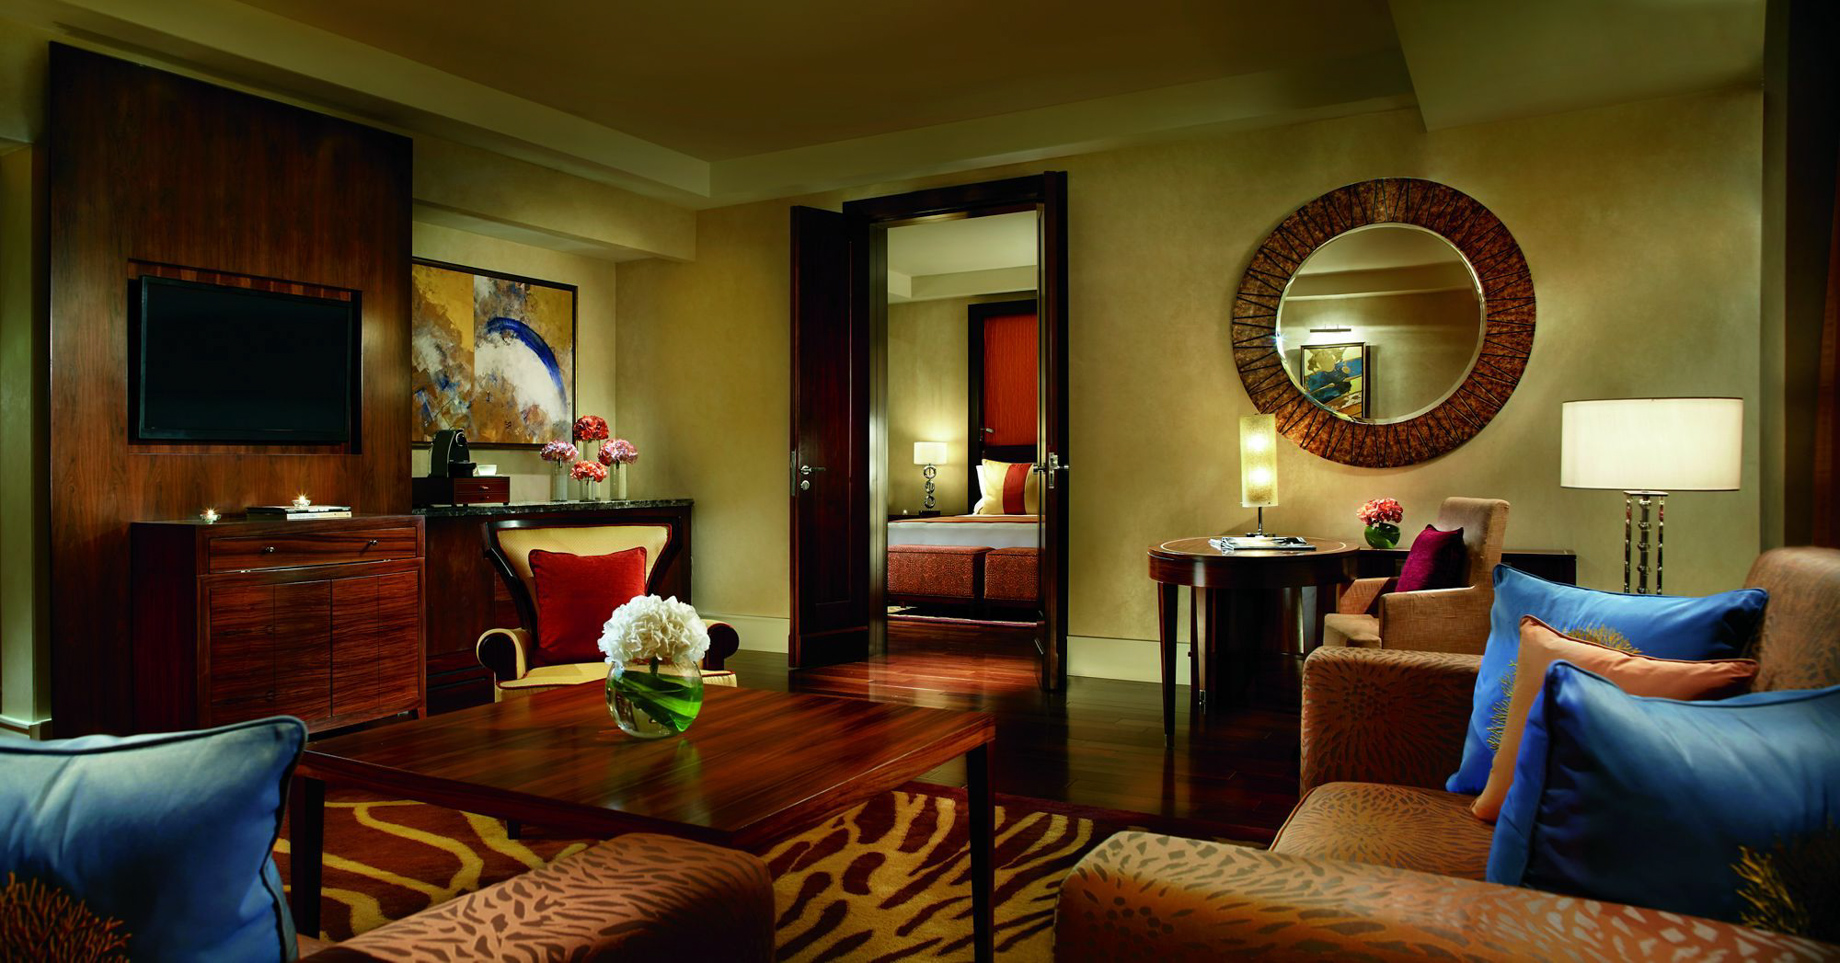 The Ritz-Carlton, Bangalore Hotel - Bangalore, Karnataka, India - Guest Suite Bedroom